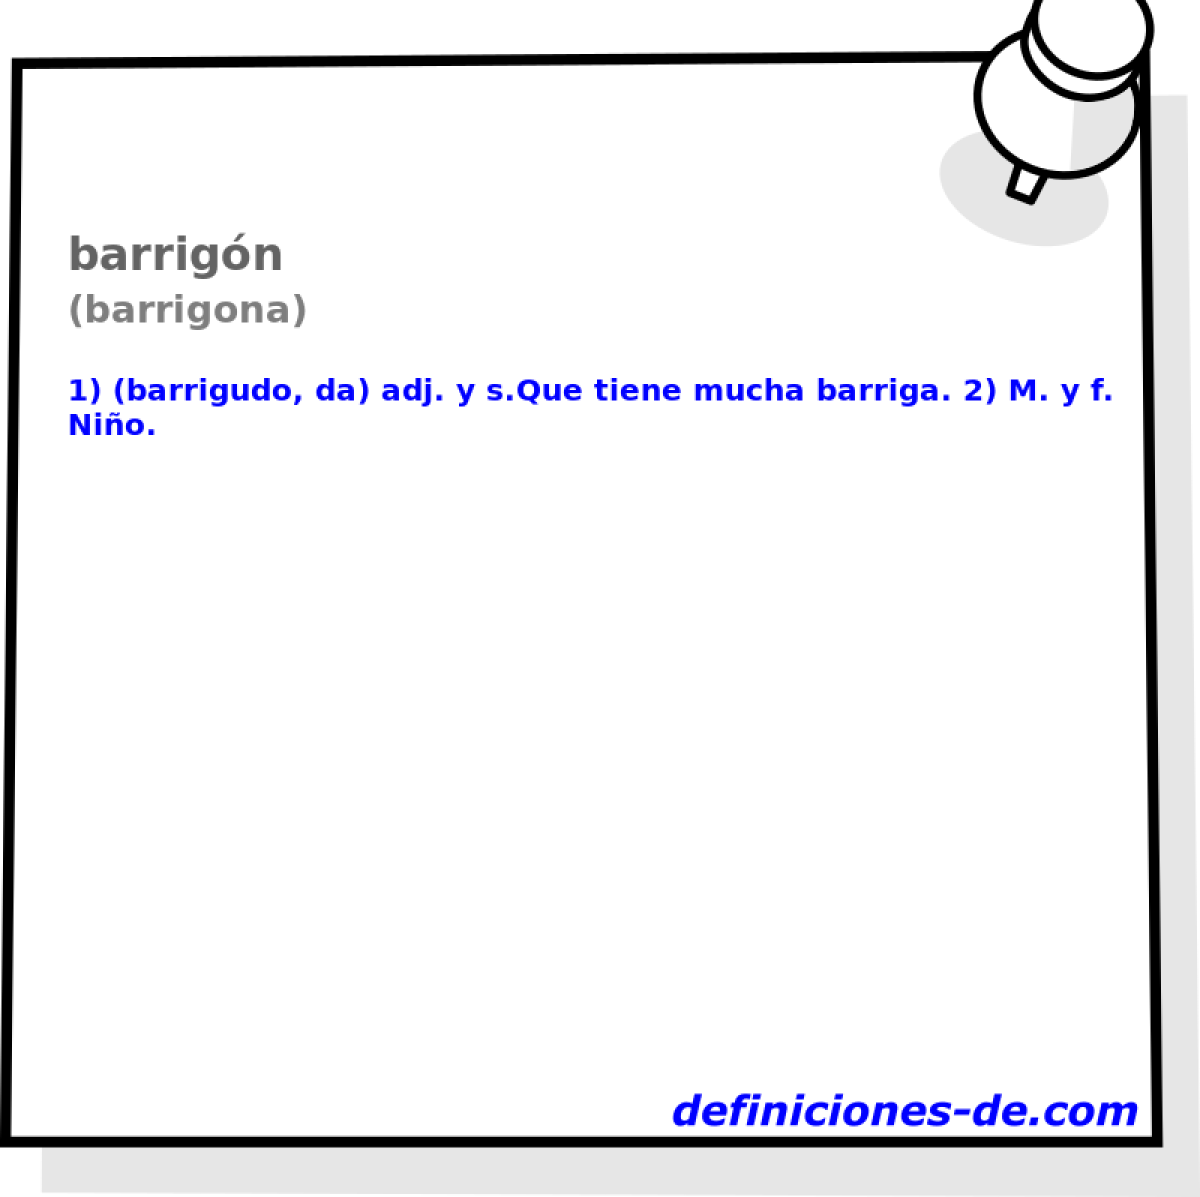 barrign (barrigona)